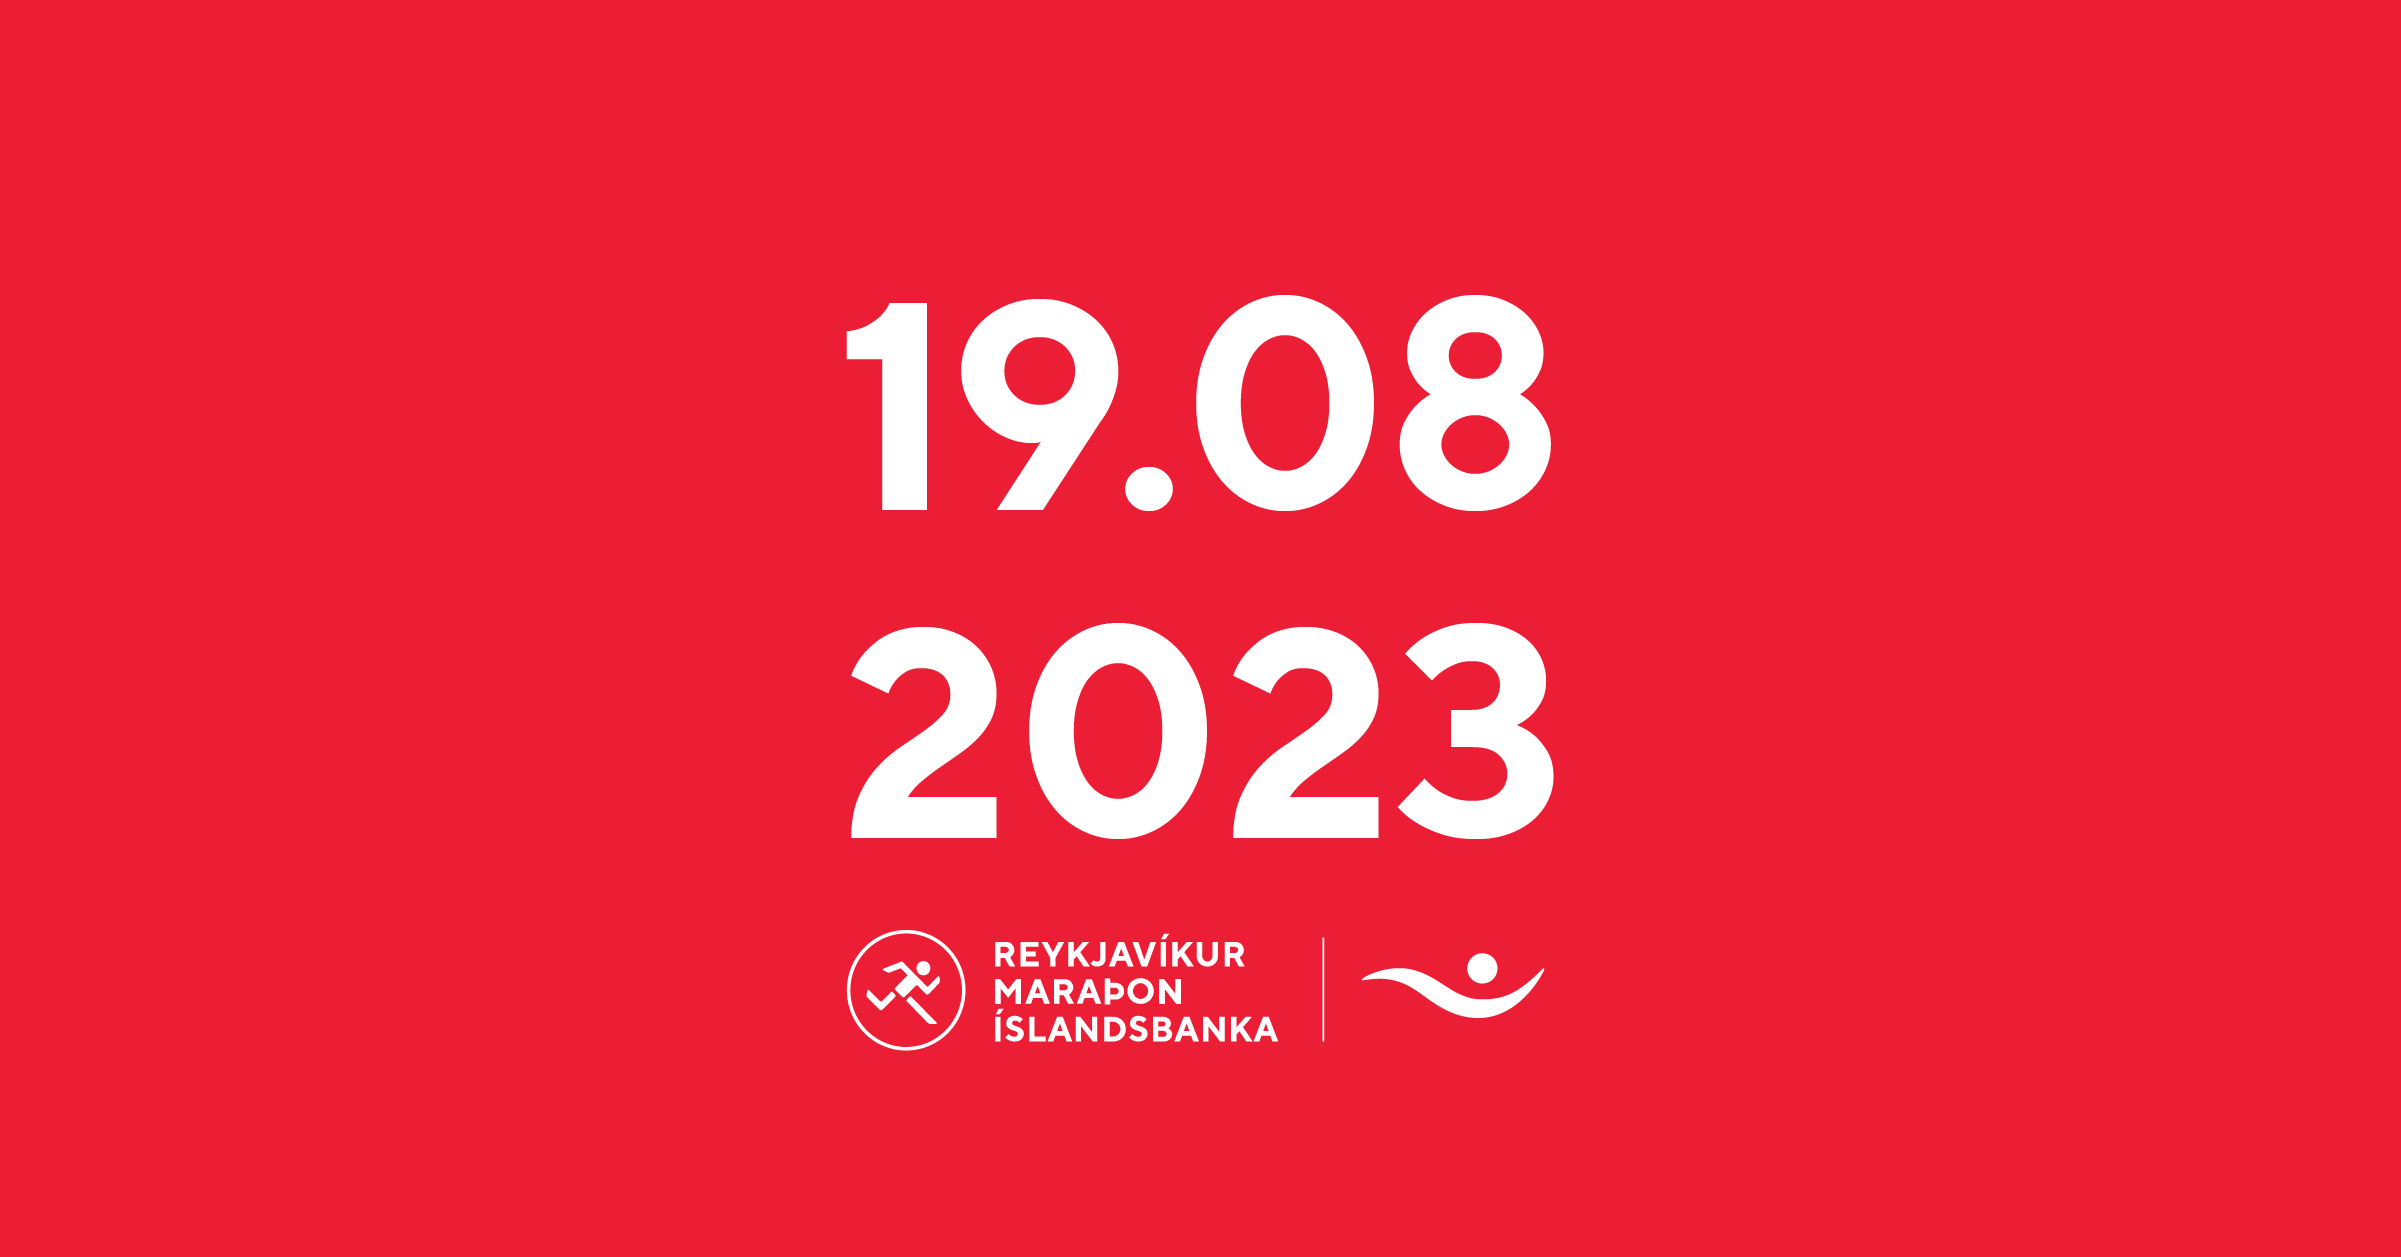 Islandsbanki Reykjavik Marathon 2023 event image